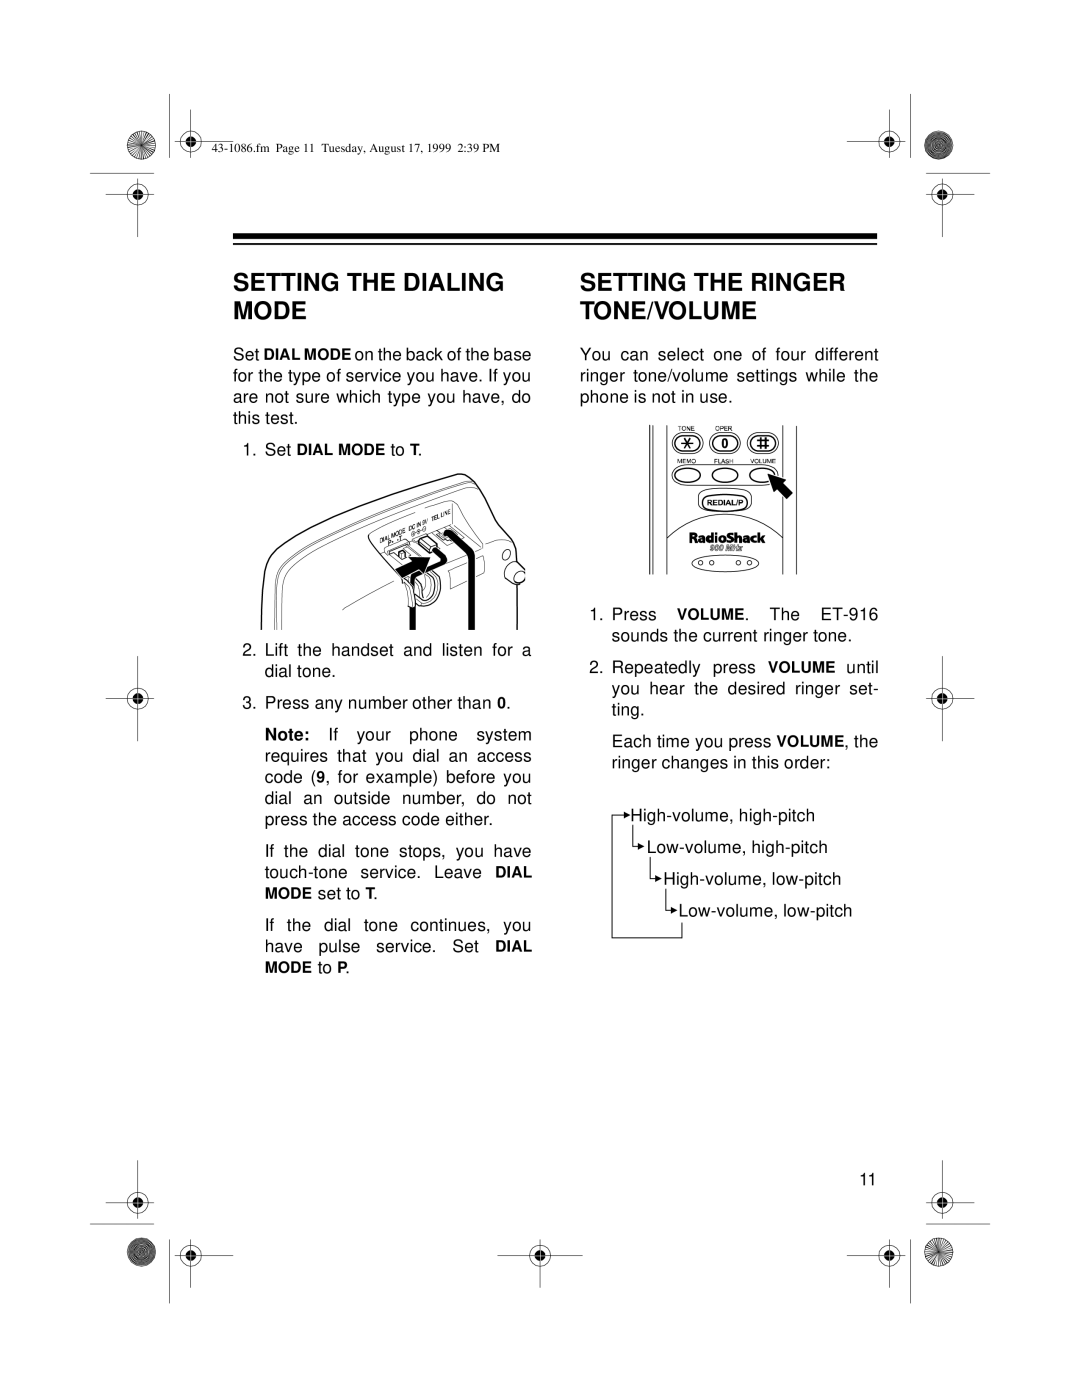 Radio Shack ET-916 owner manual Setting The Dialing Mode, Setting The Ringer Tone/Volume 